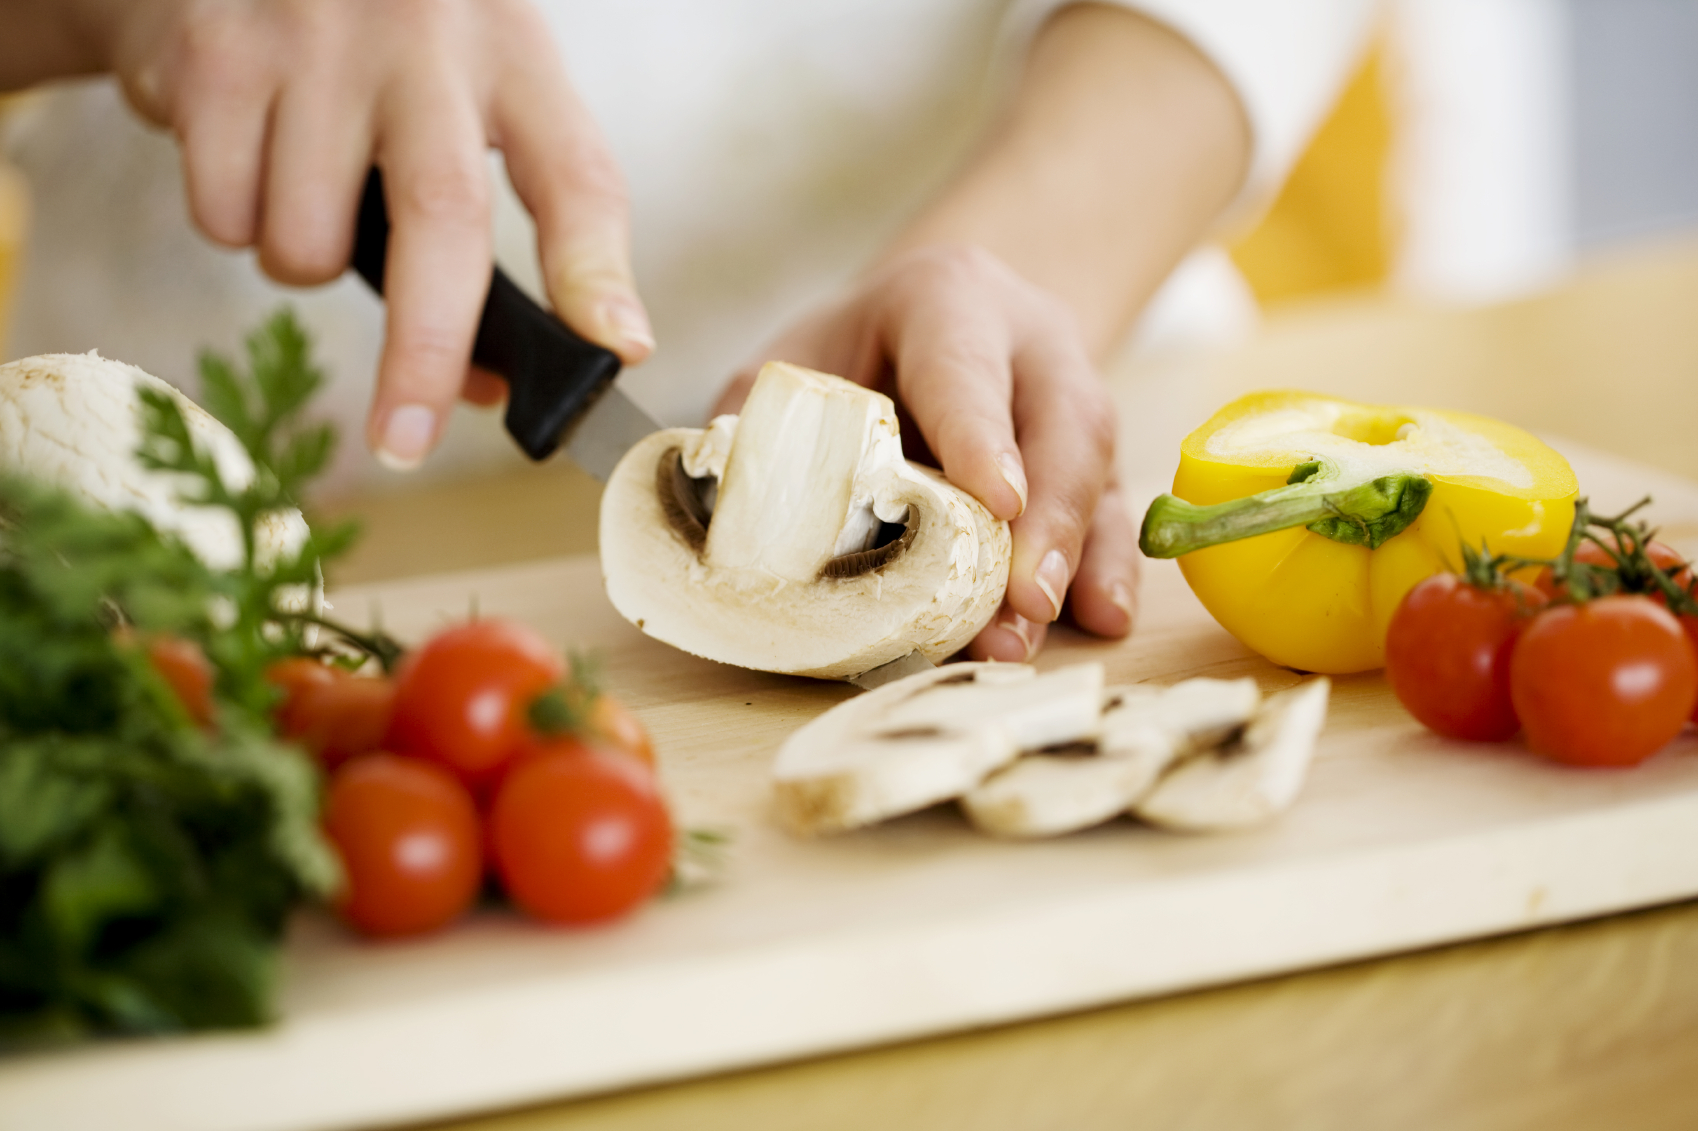 female chopping food ingredients